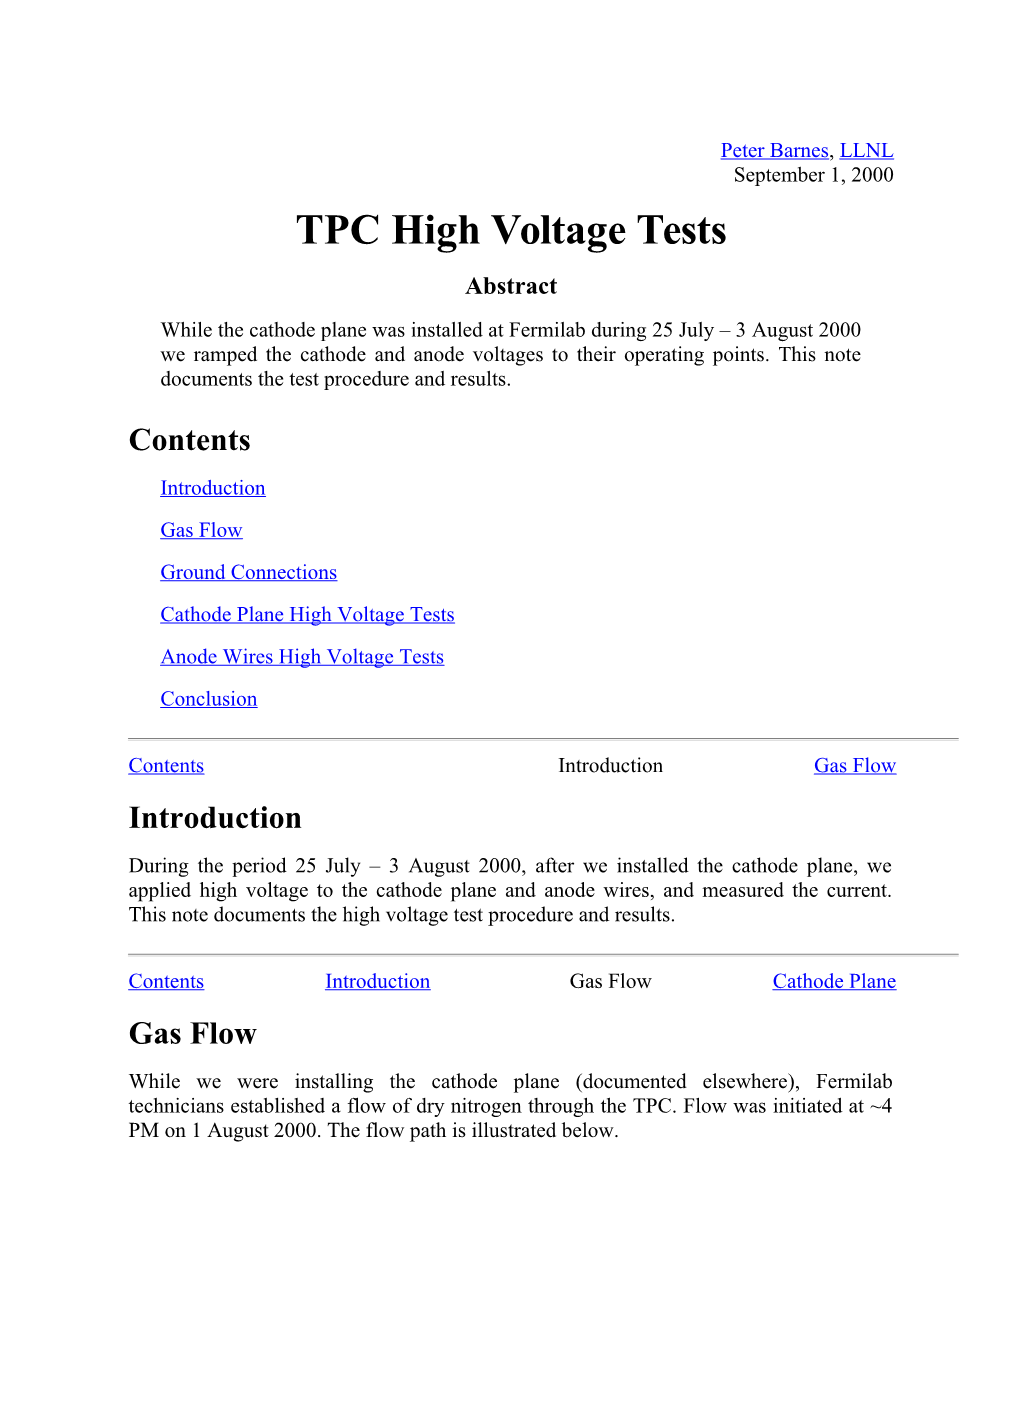 TPC High Voltage Tests